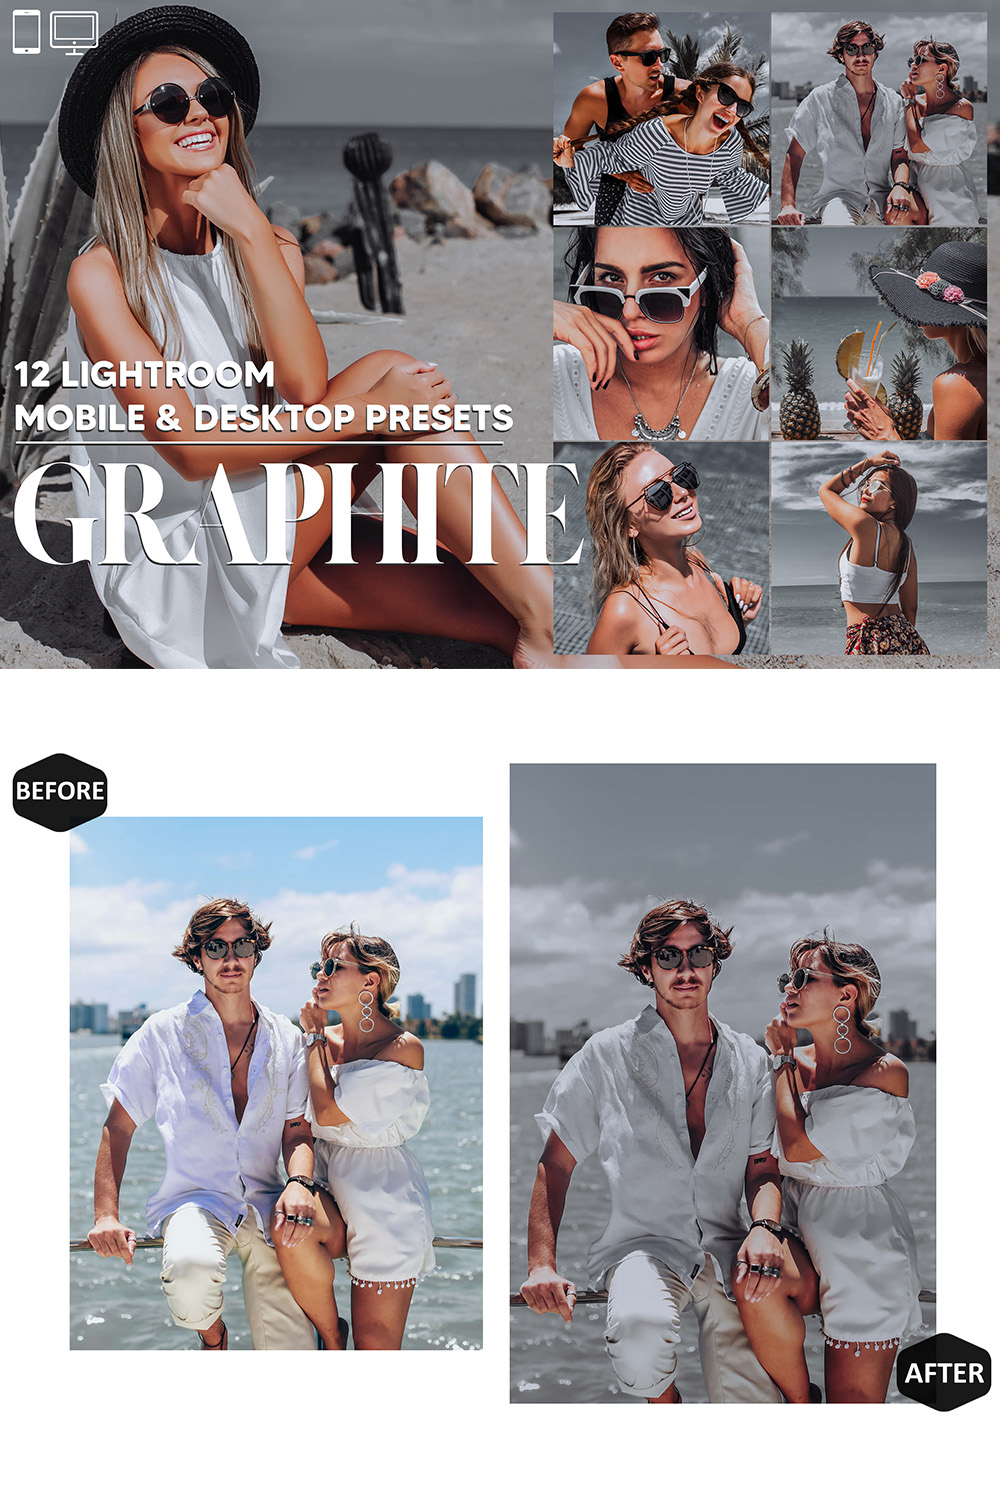 12 Graphite Lightroom Presets, Smooky Gray Mobile Preset, Grey Desktop, Portrait And Lifestyle Theme For Instagram, Blogger LR Filter DNG pinterest preview image.